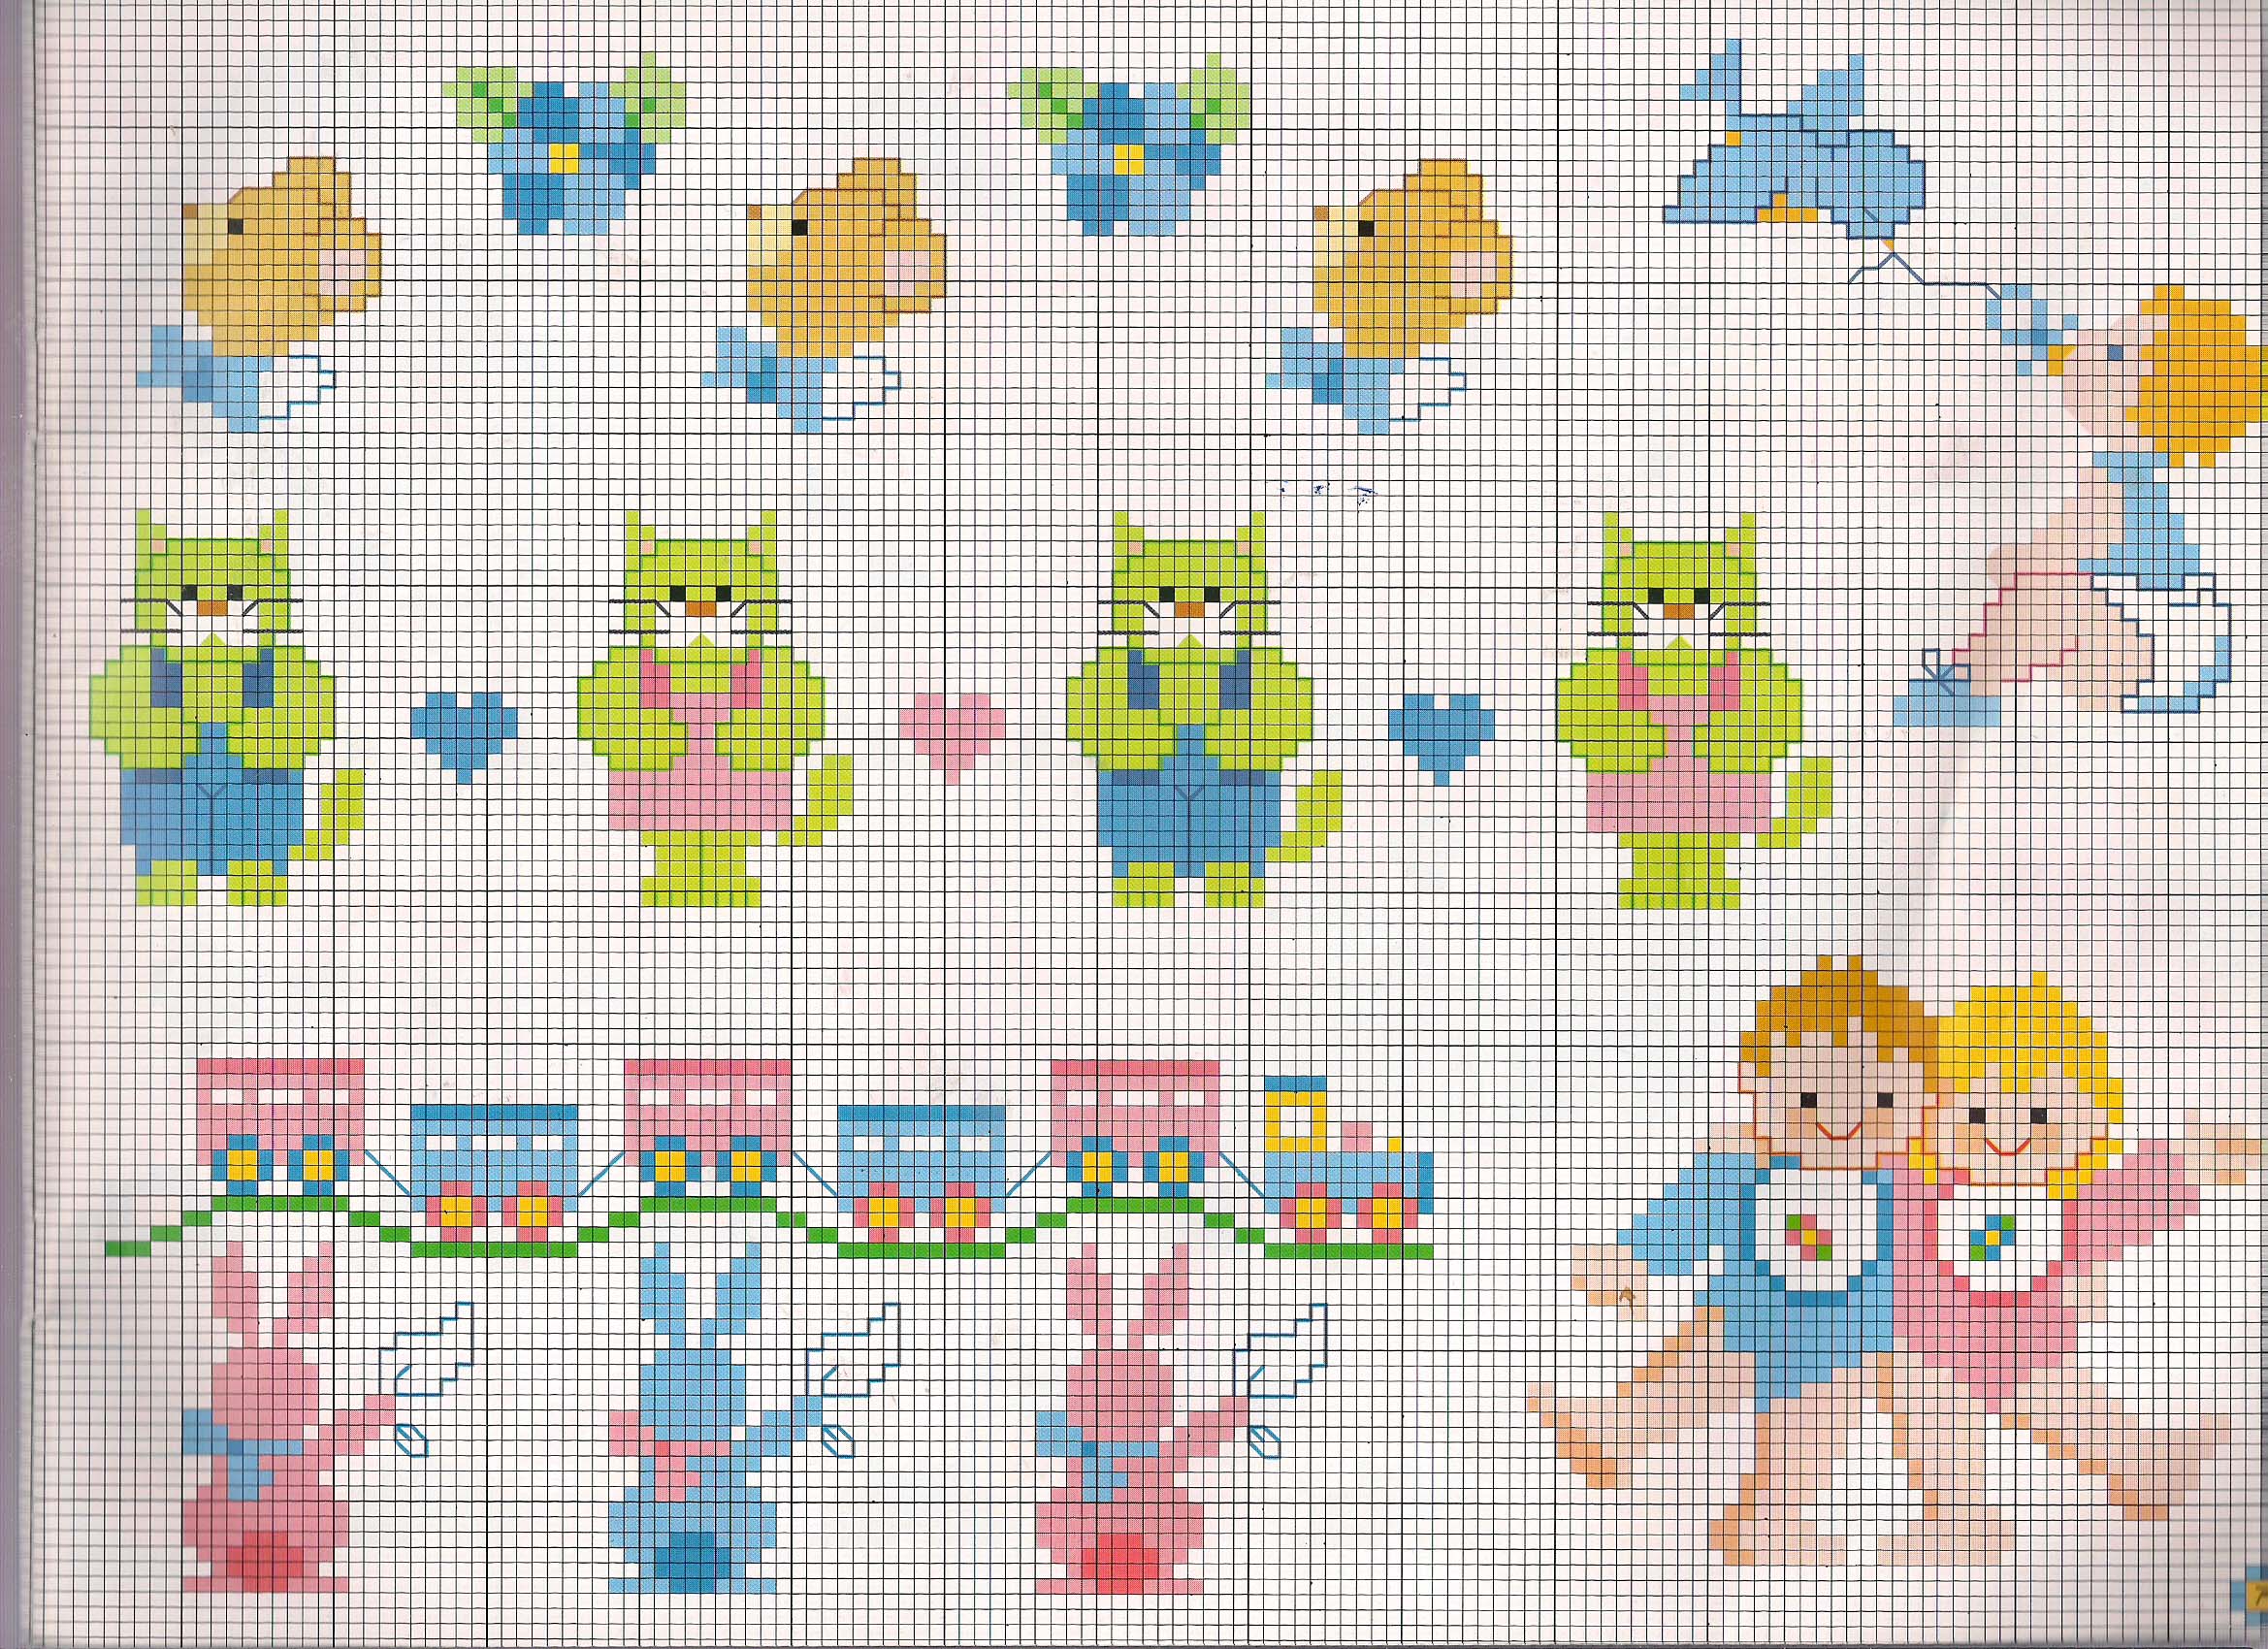 Teddy bears green cats train toys cross stitch patterns